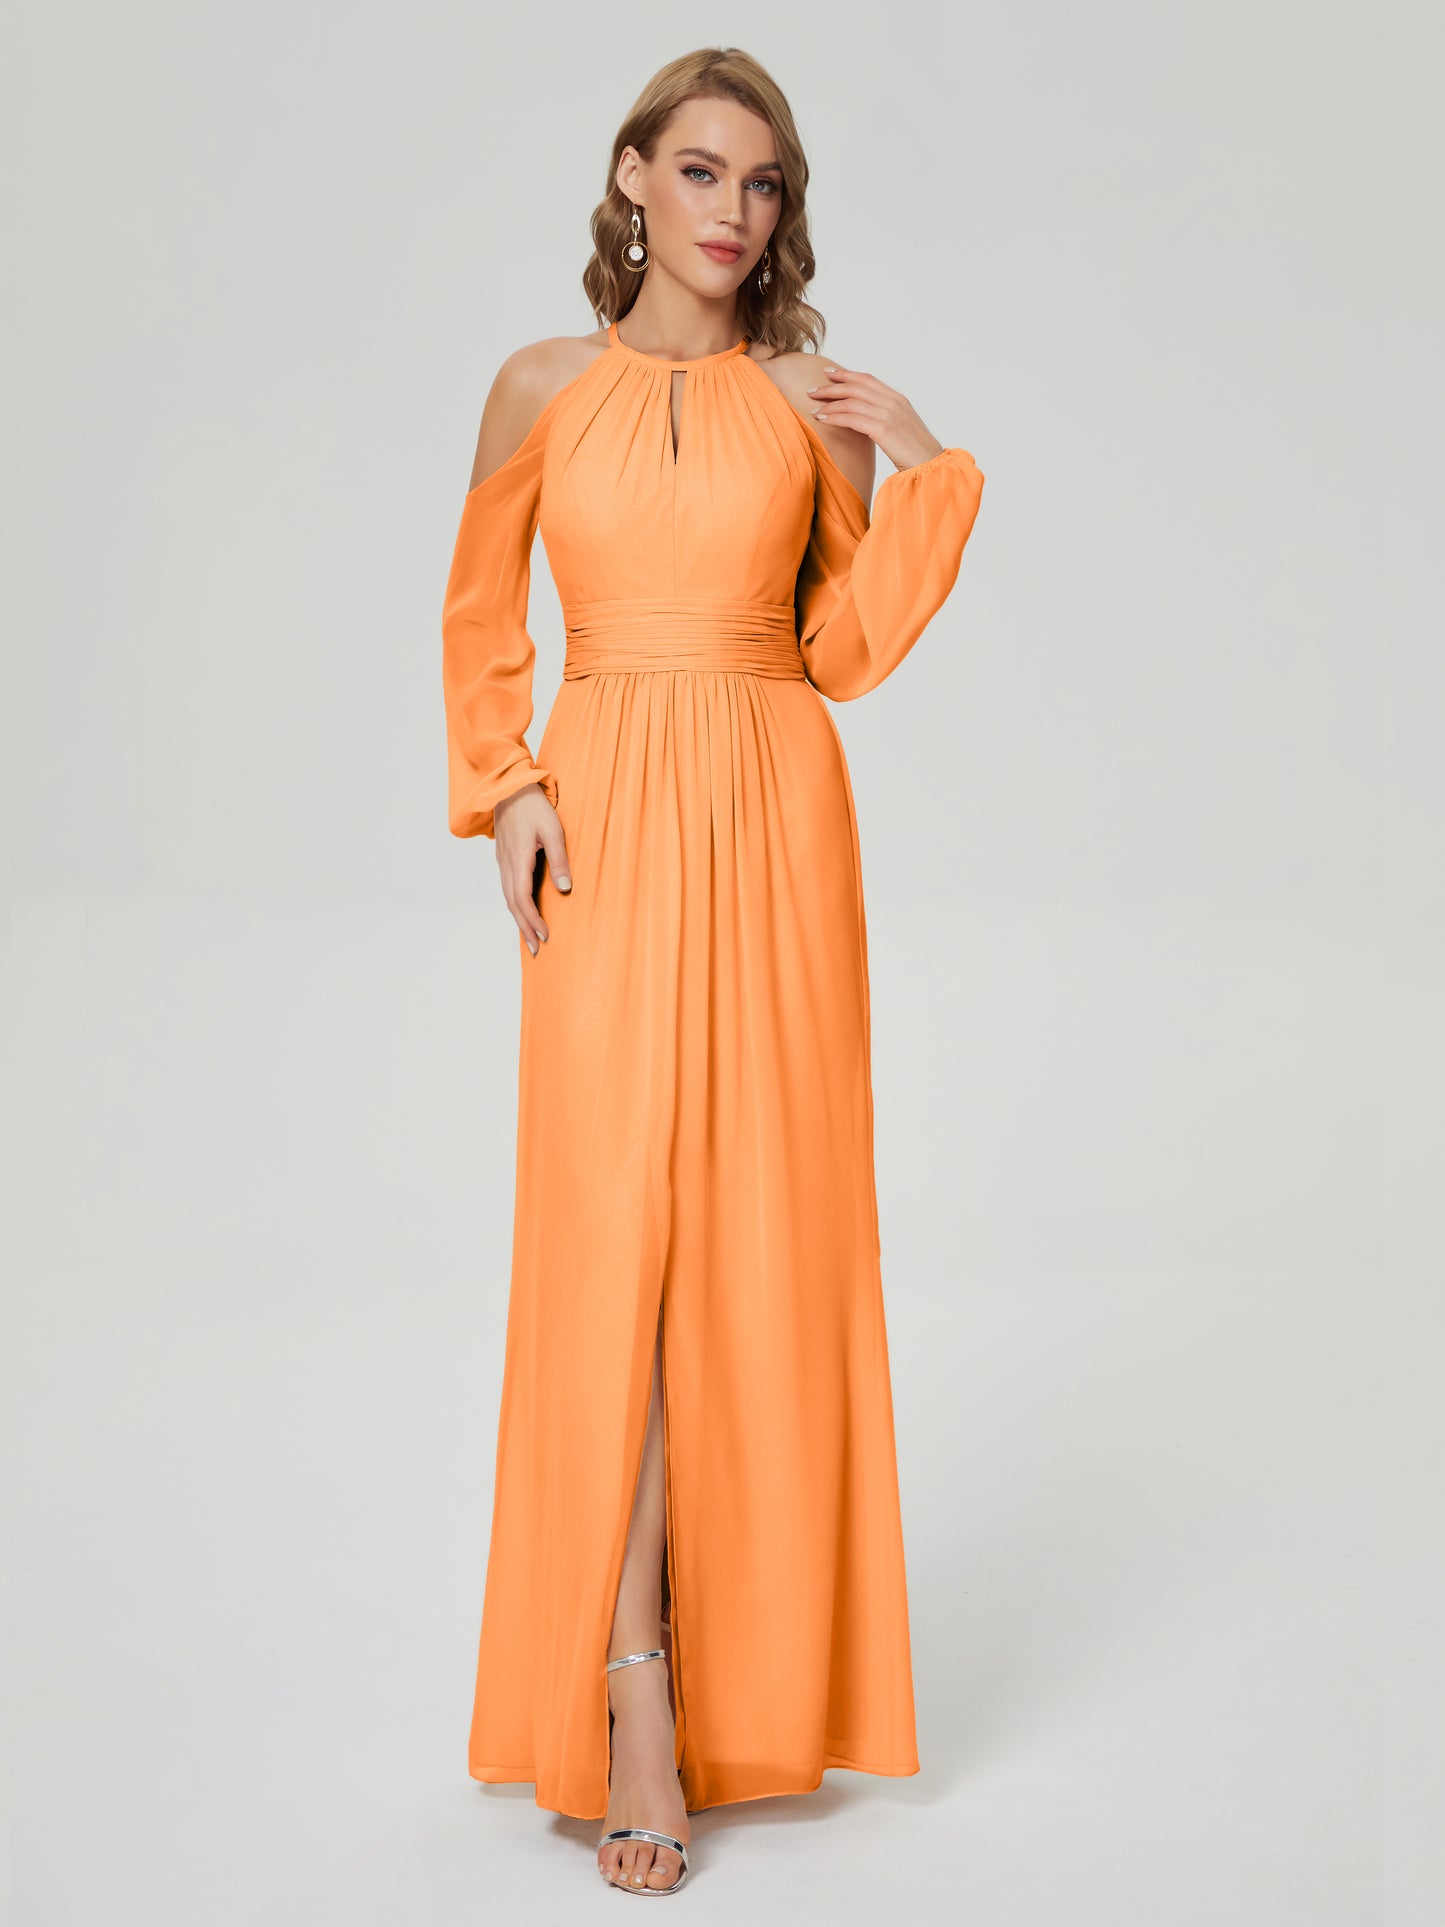 Phoebe Long Sleeves Column Chiffon Bridesmaid Dress